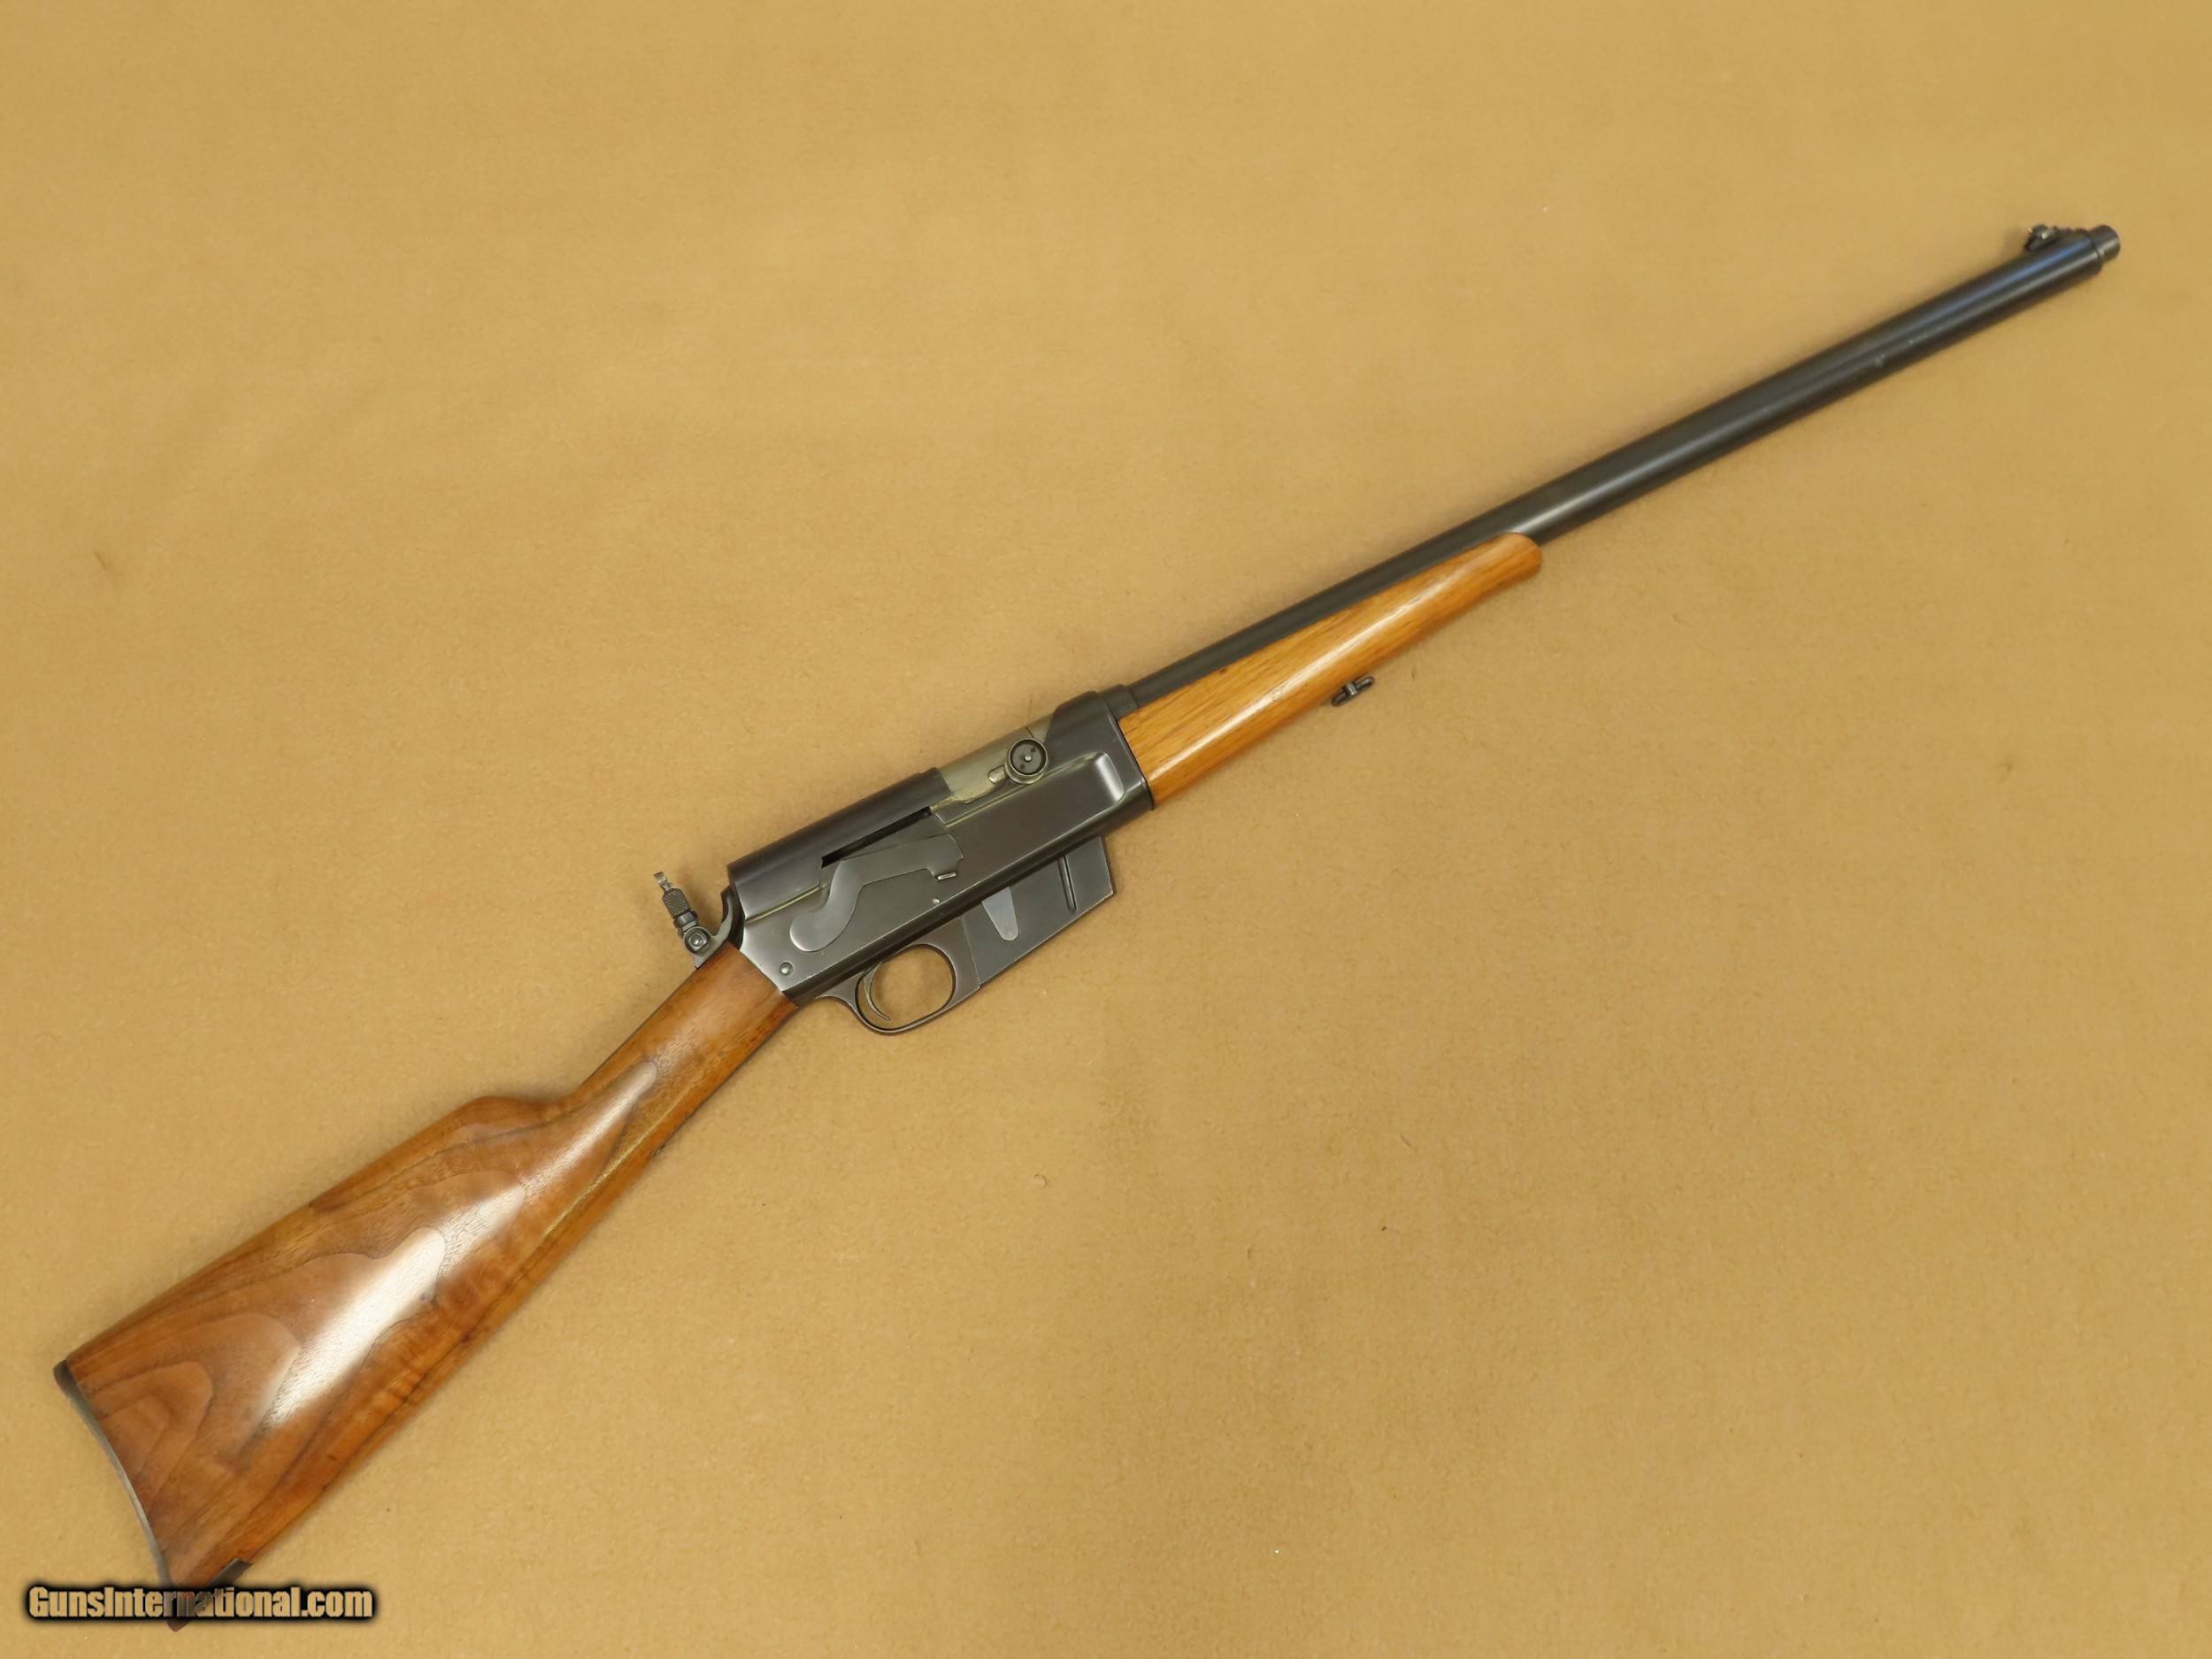 Self loading. Ремингтон 1908. Самозарядная винтовка Ремингтон 1908. Самозарядная винтовка Ремингтон. M1908c3ig модель.